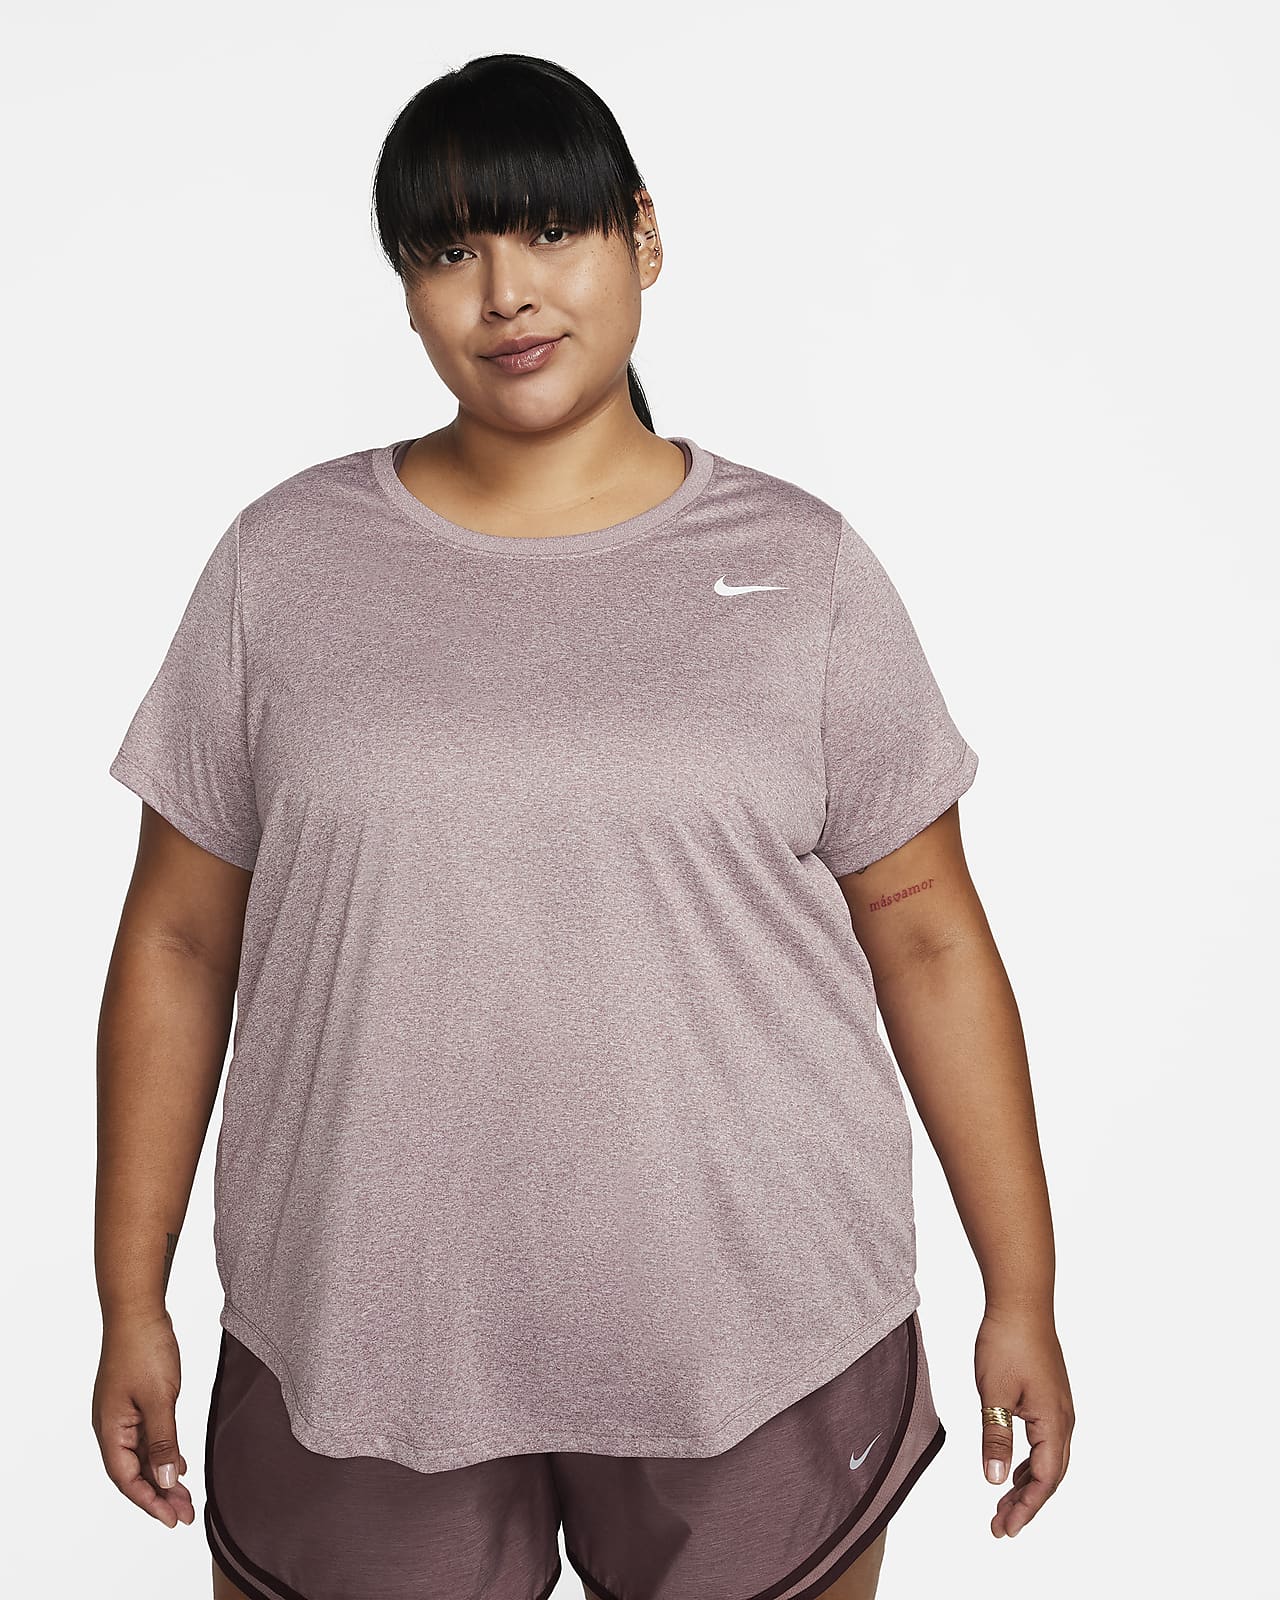 New Balance Running Long Sleeve T-shirt Women's B Dry Athletic Top Gray  Size L